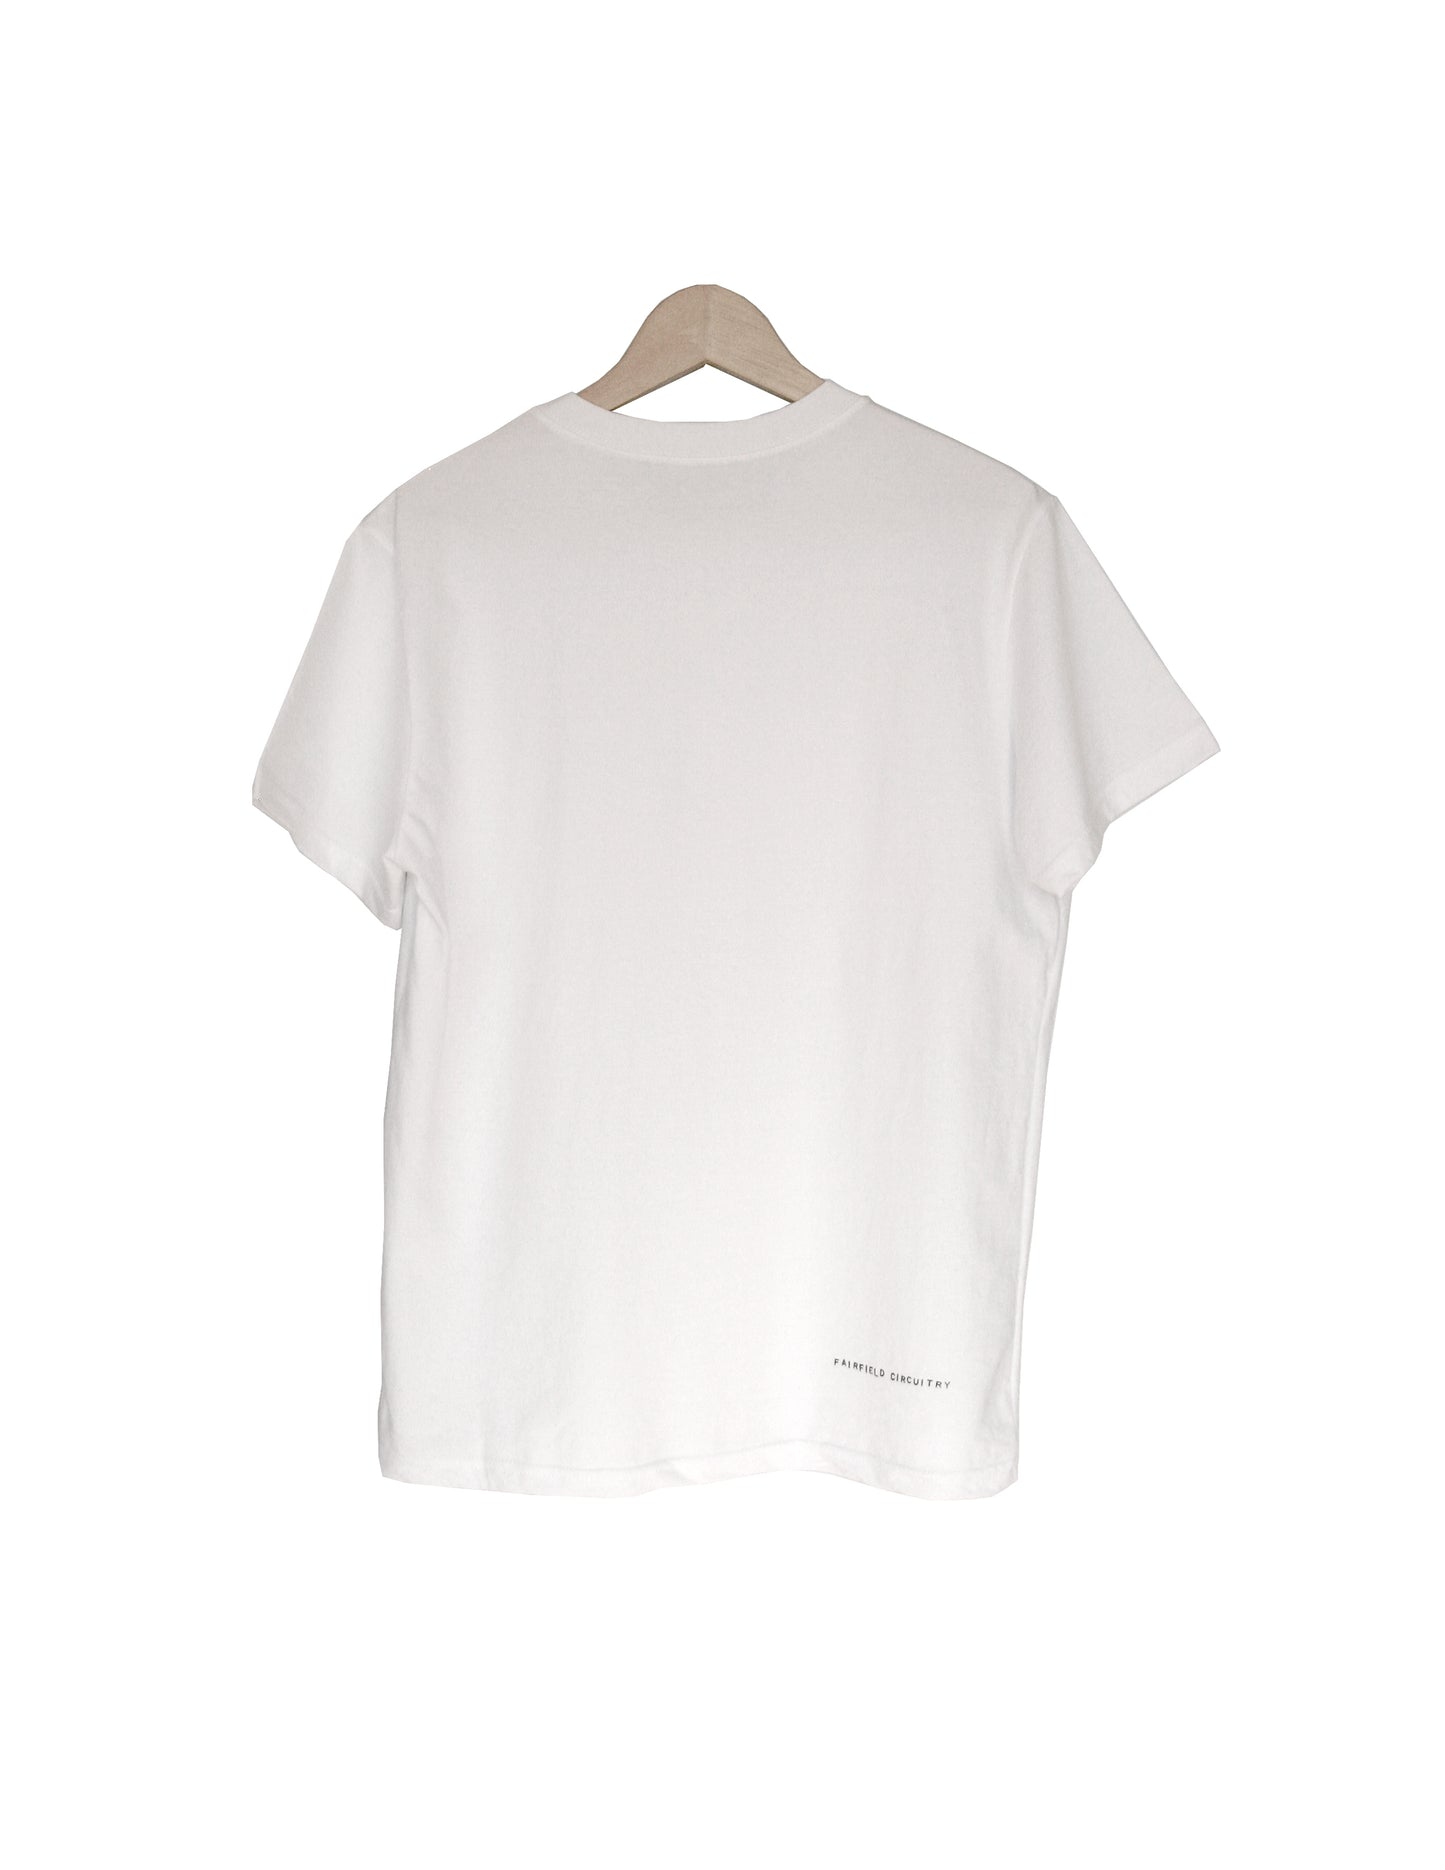 TOPR - Tome 5 - T-shirt blanc